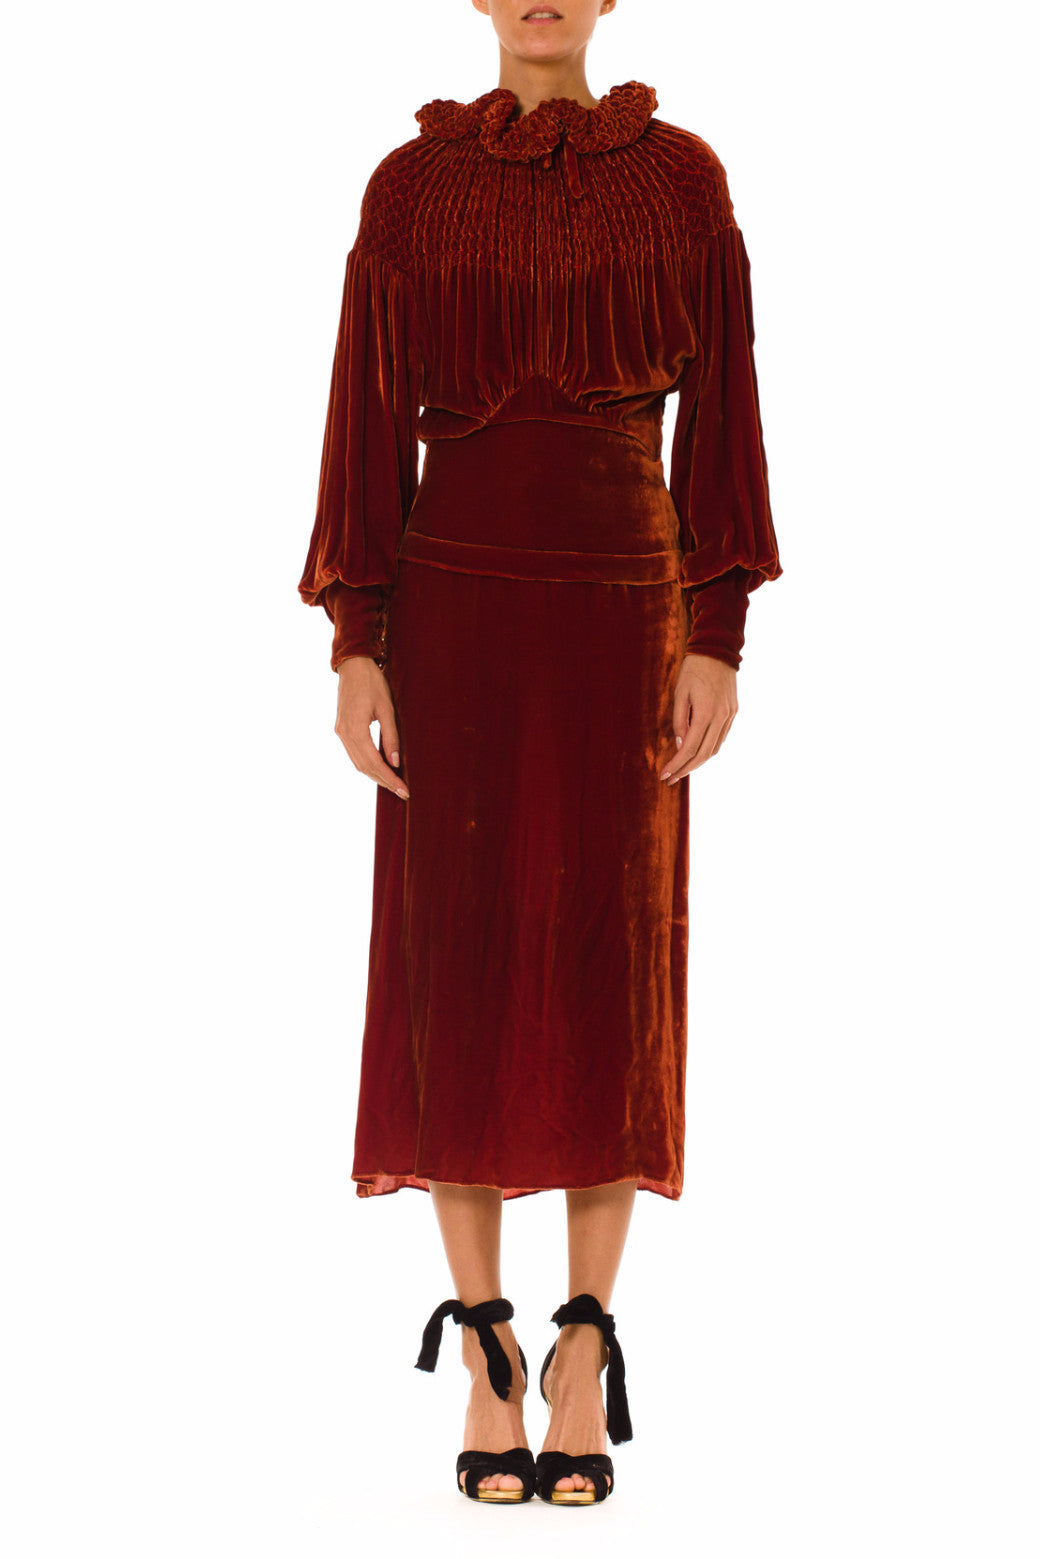 1930s Surrealist Dress in Luxurious Silk Velvet – MORPHEW